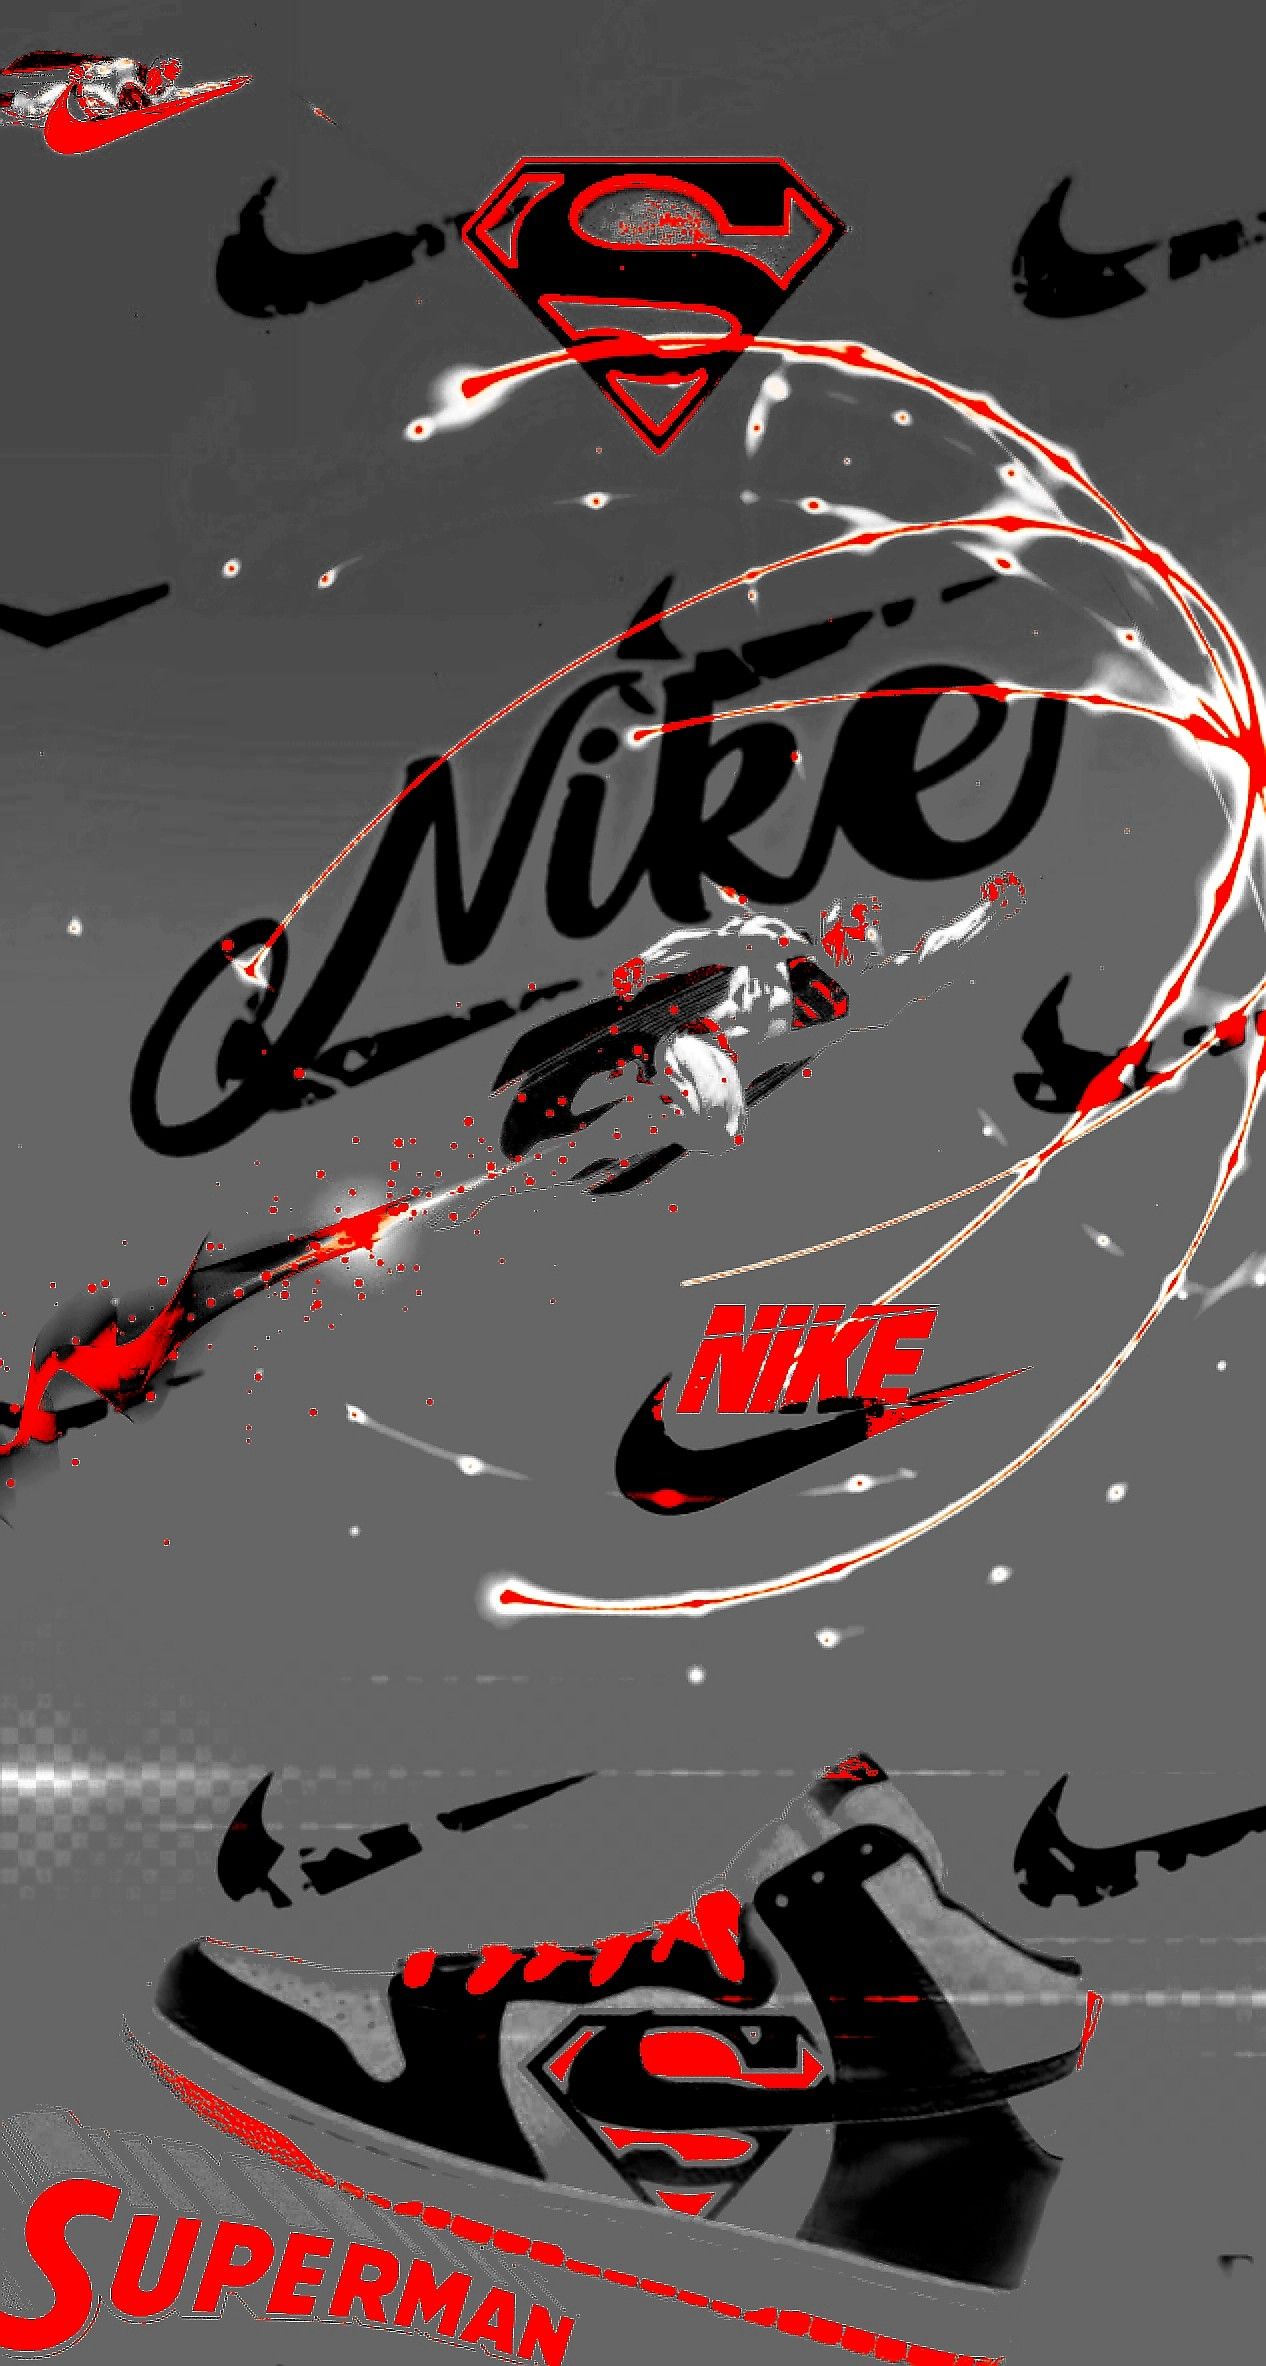 Nike wallpaper. Nike wallpaper, Cool nike wallpaper, Cool adidas wallpaper